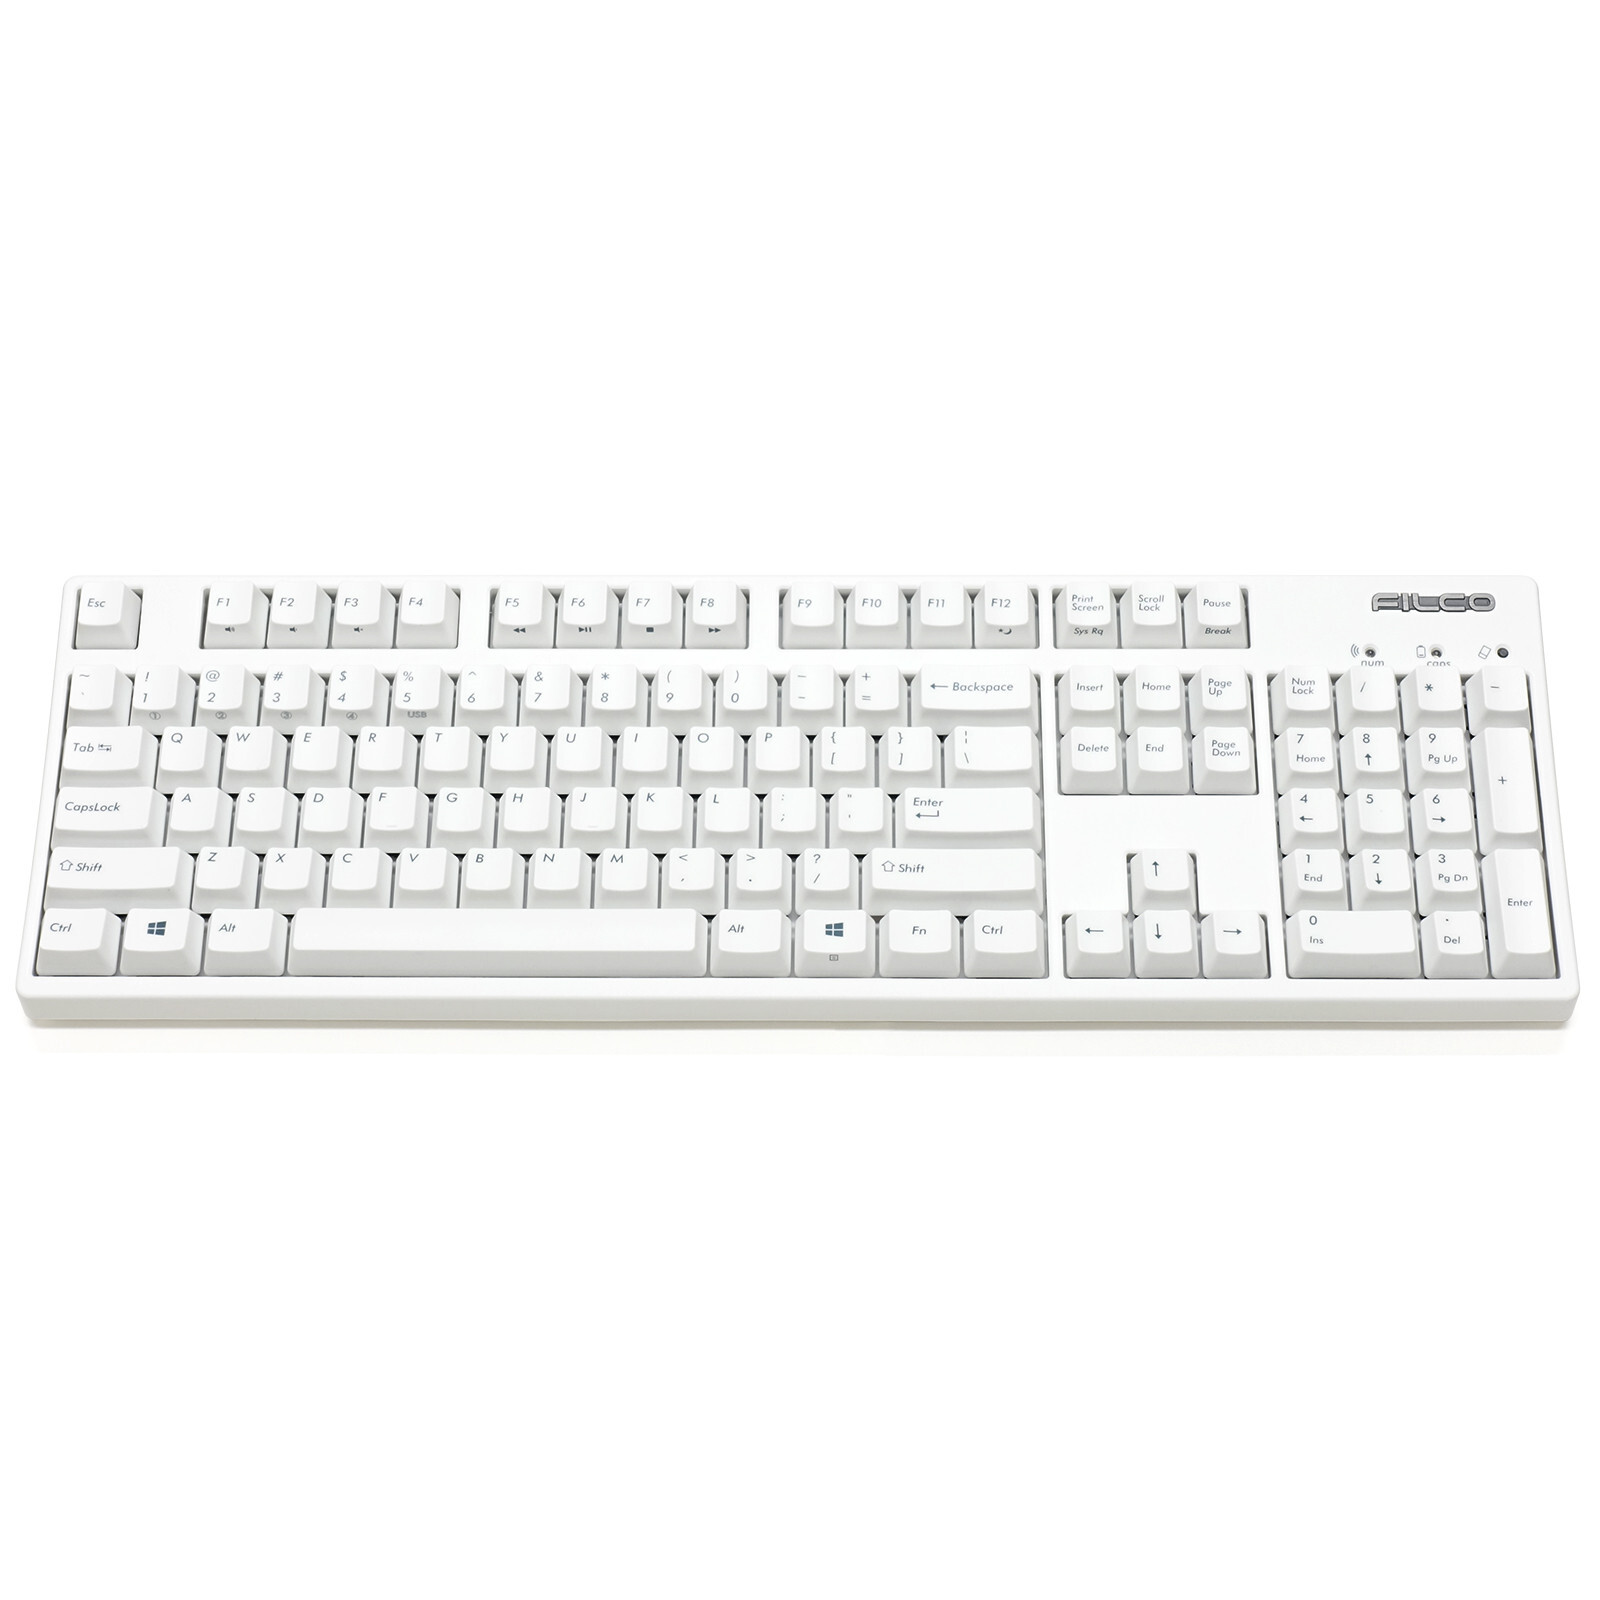 Bàn phím - Keyboard Filco Majestouch Convertible 2 Hakua Fullsize